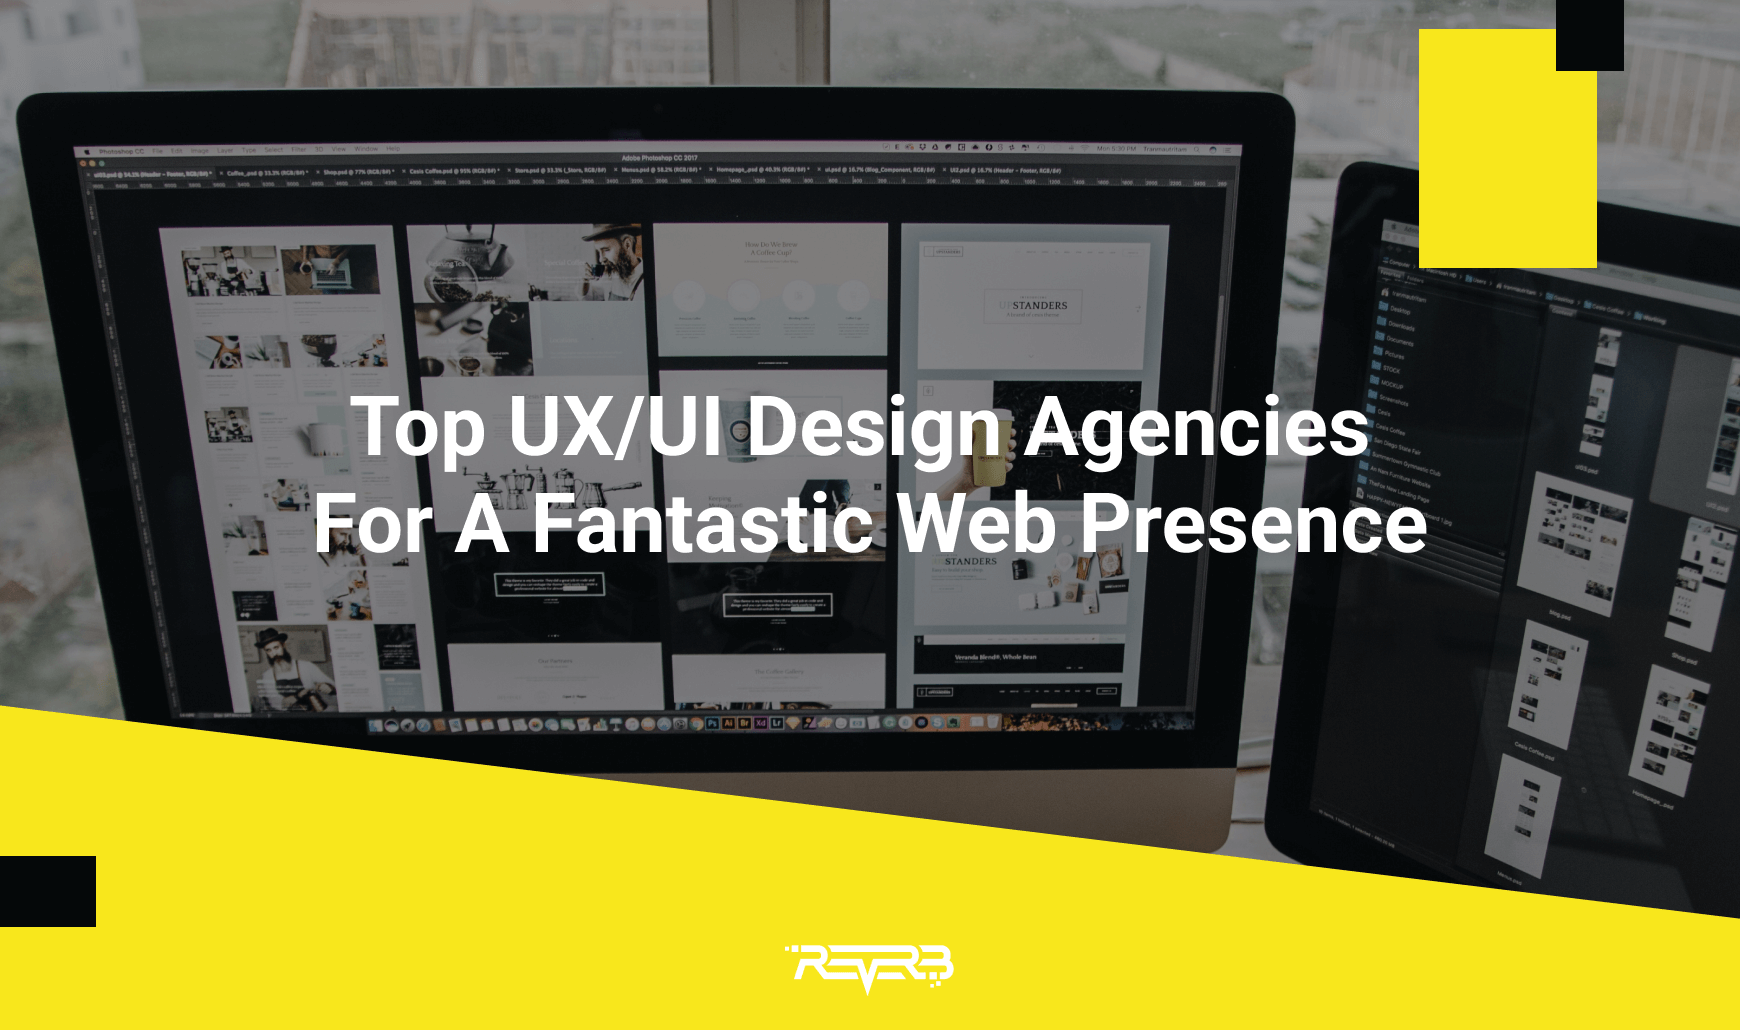 Top UX/UI Design Agencies And Designers - ReVerb